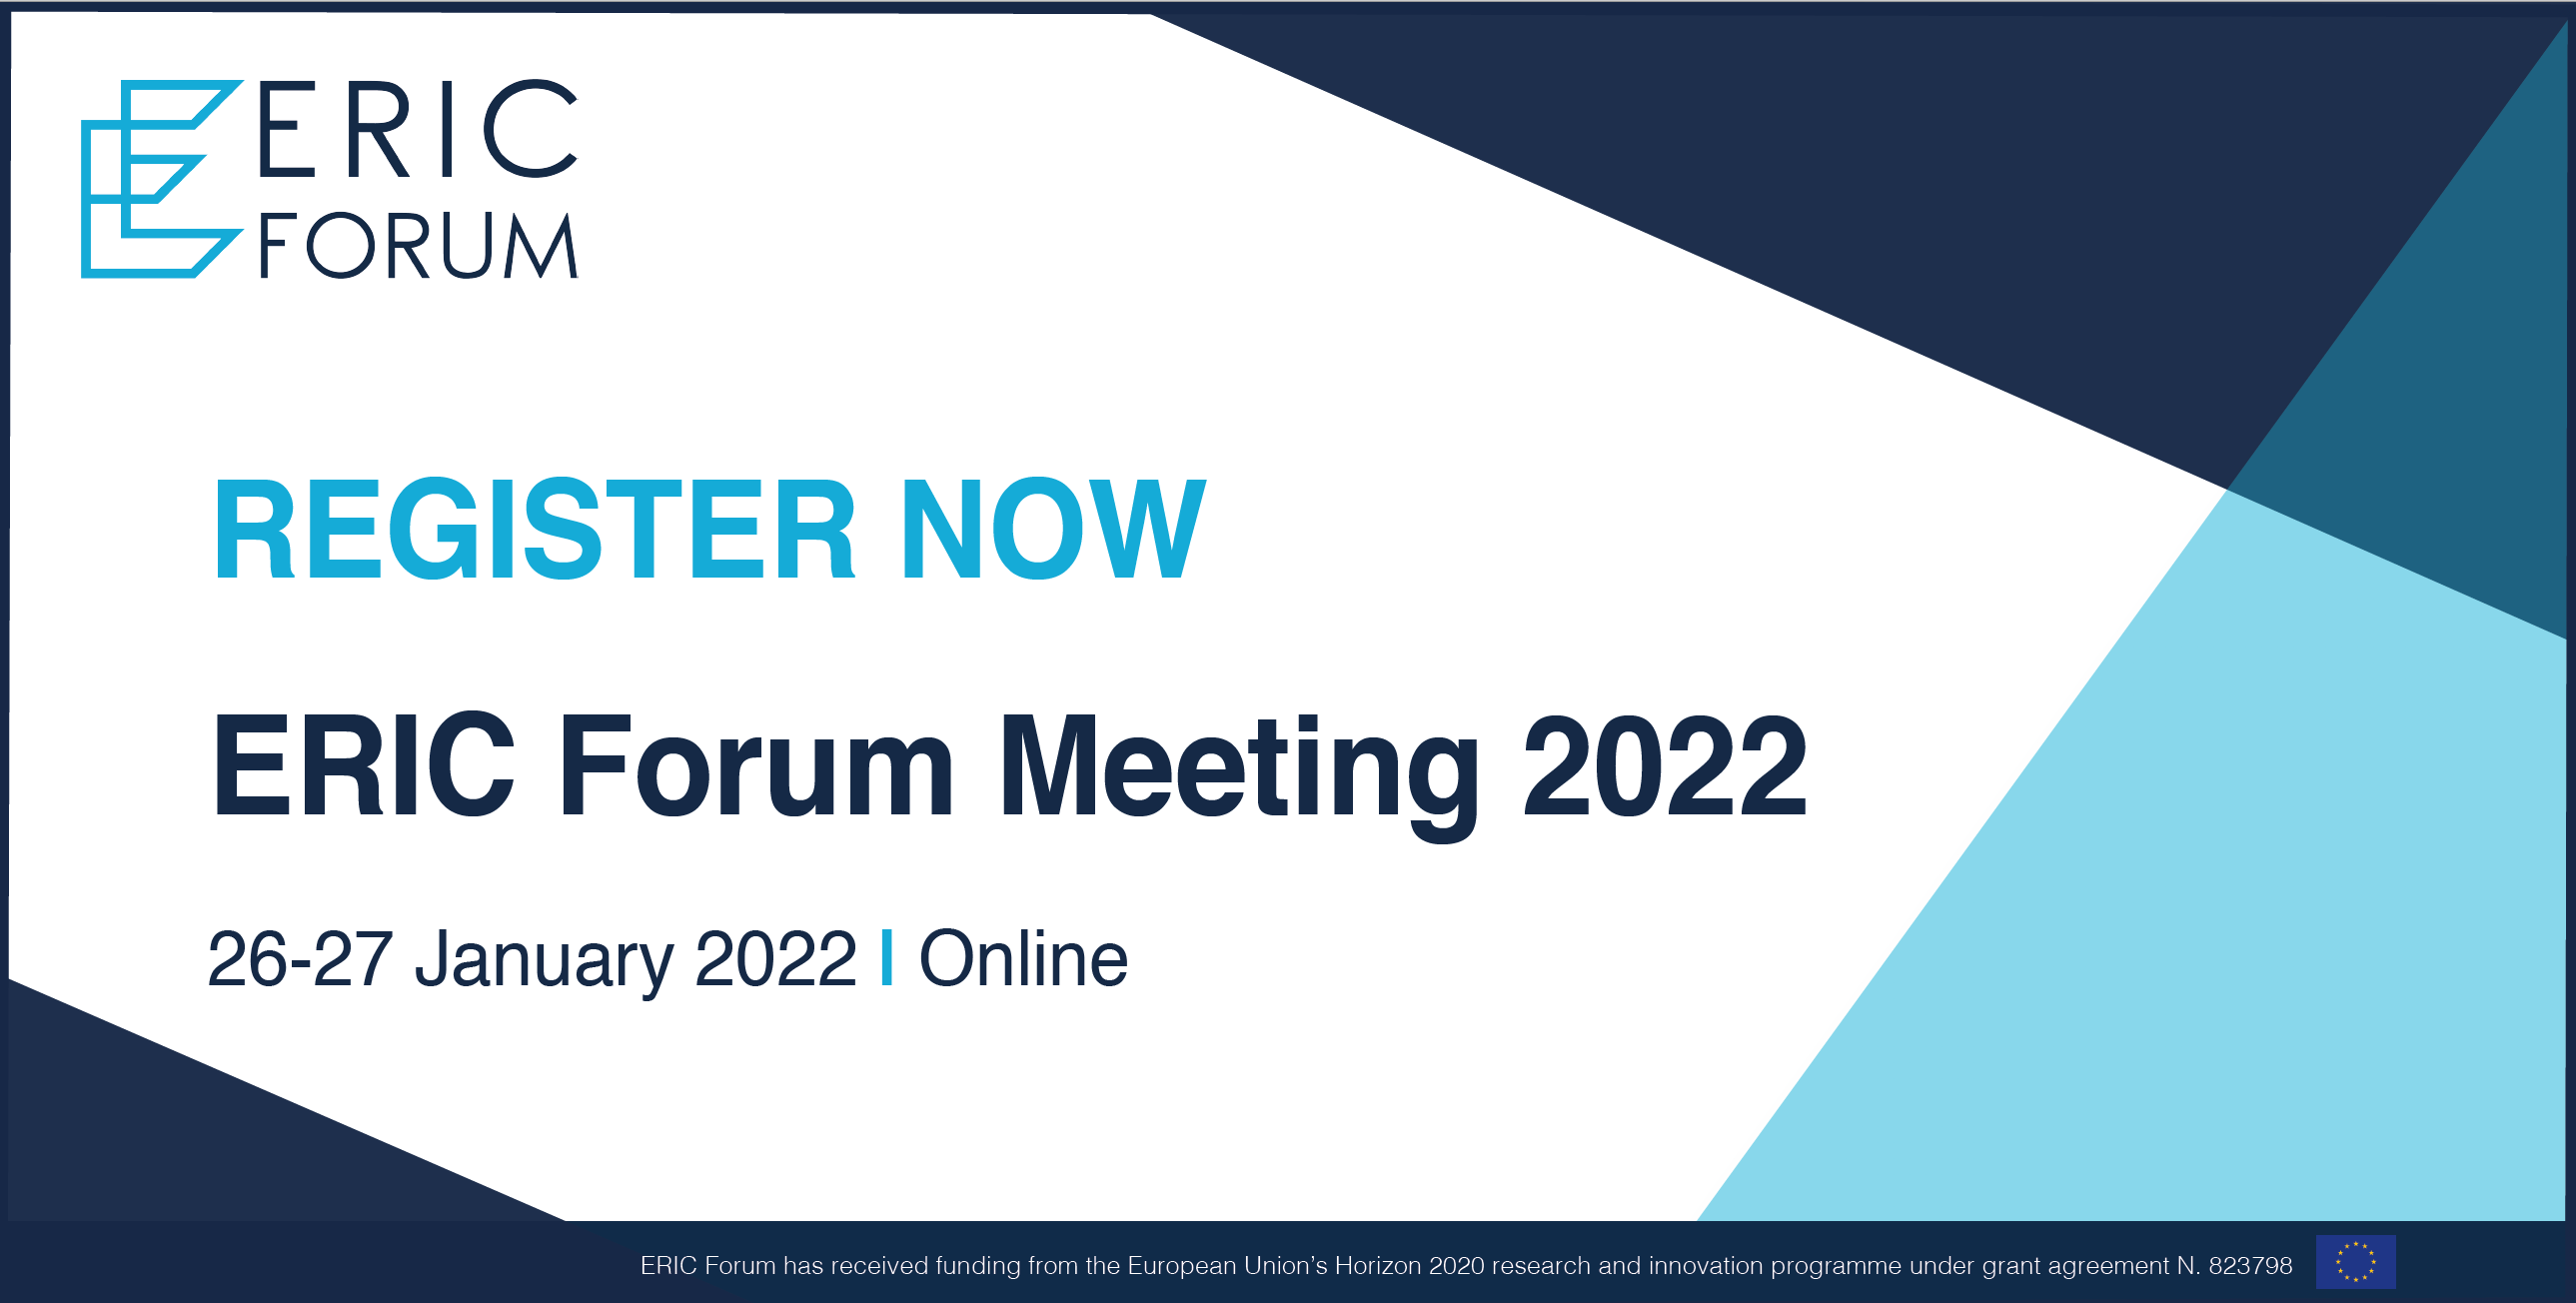 eric forum meeting 2022 banner